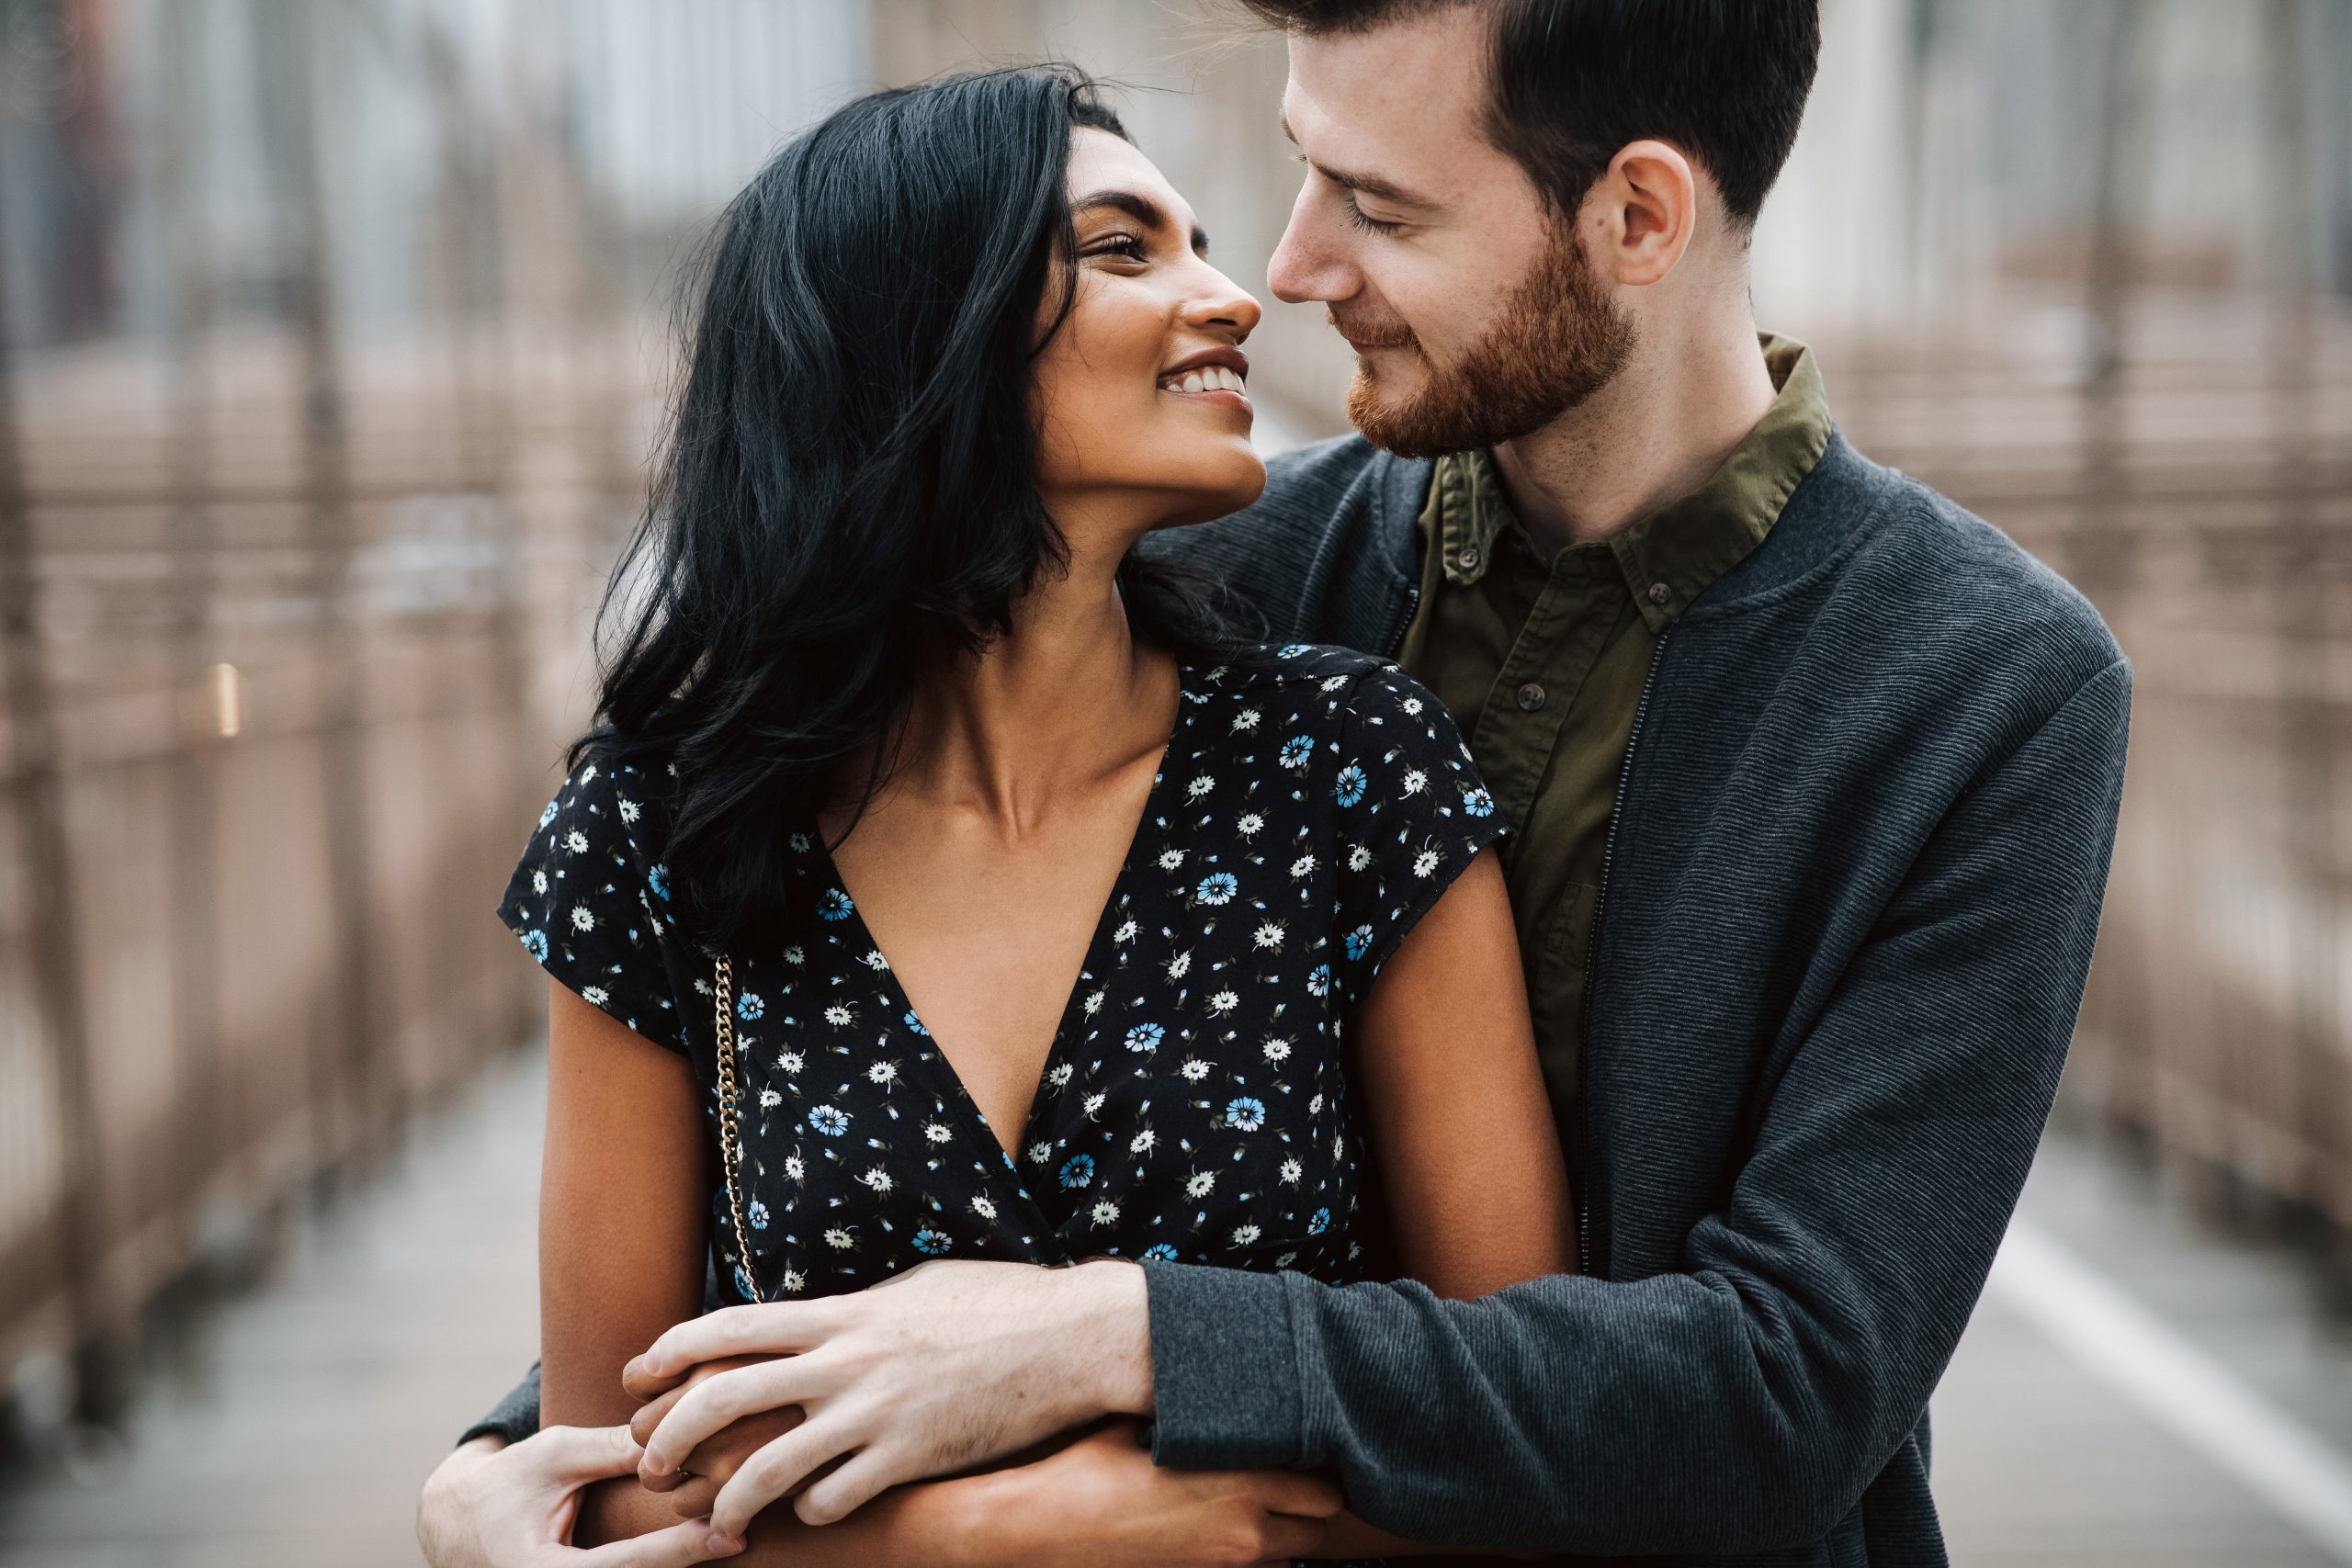 https://topforeignbrides.com/wp-content/uploads/2020/10/happy-smiling-couple-scaled.jpg